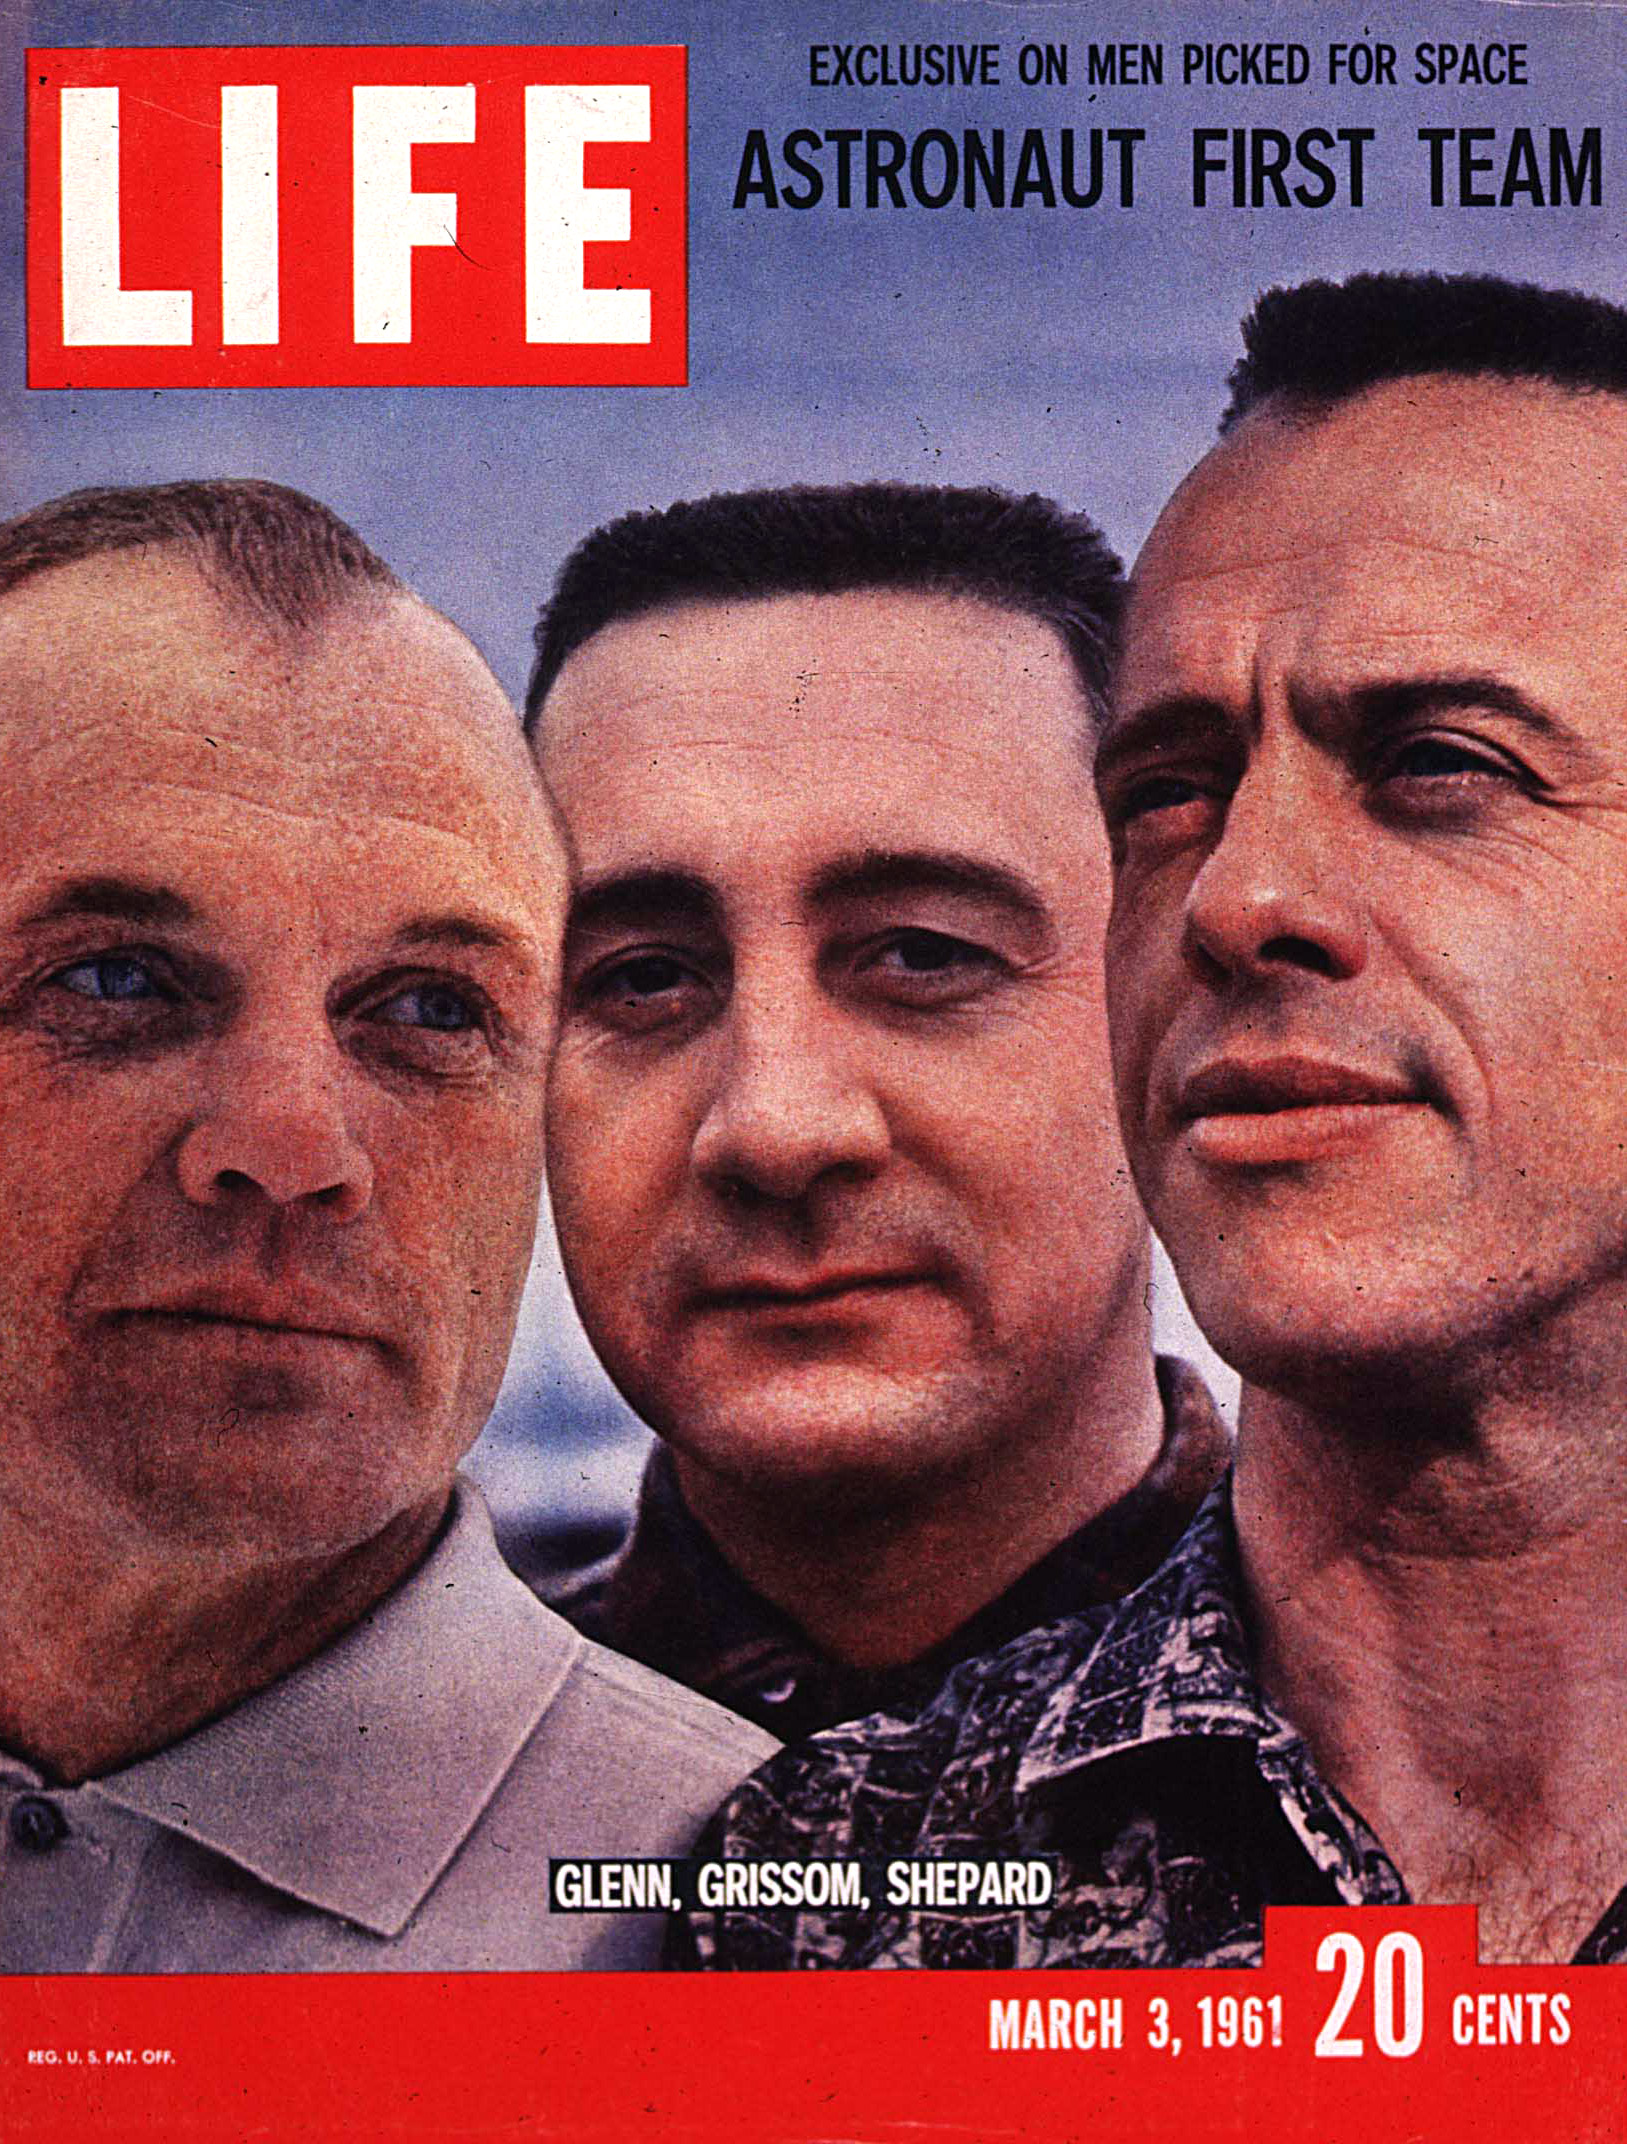 March 3, 1961 cover of LIFE magazine— group portrait of Mercury astronauts John Glenn, Gus Grissom and Alan Shepard.